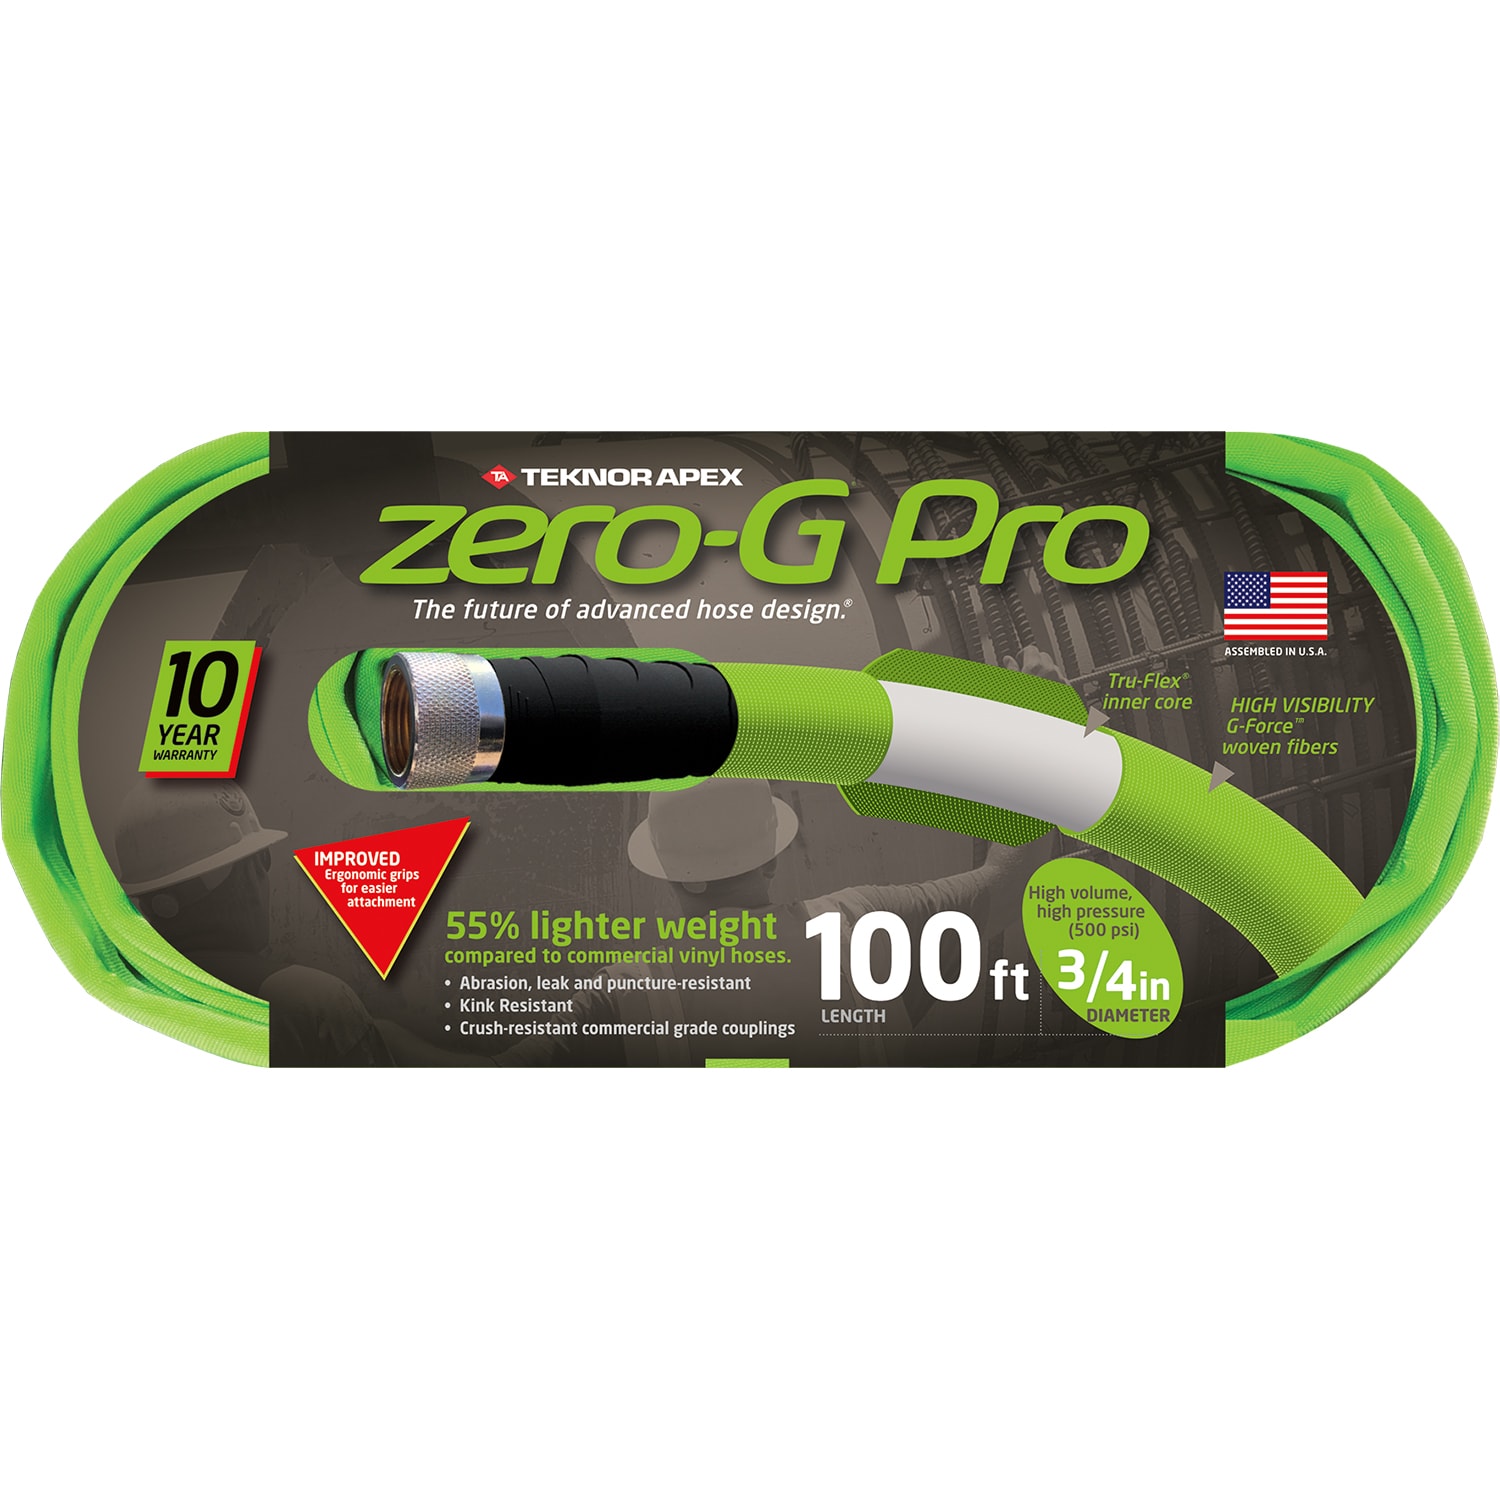 Zero-G Pro Teknor Apex 3/4-in x 100-ft Contractor-Duty Kink Free 